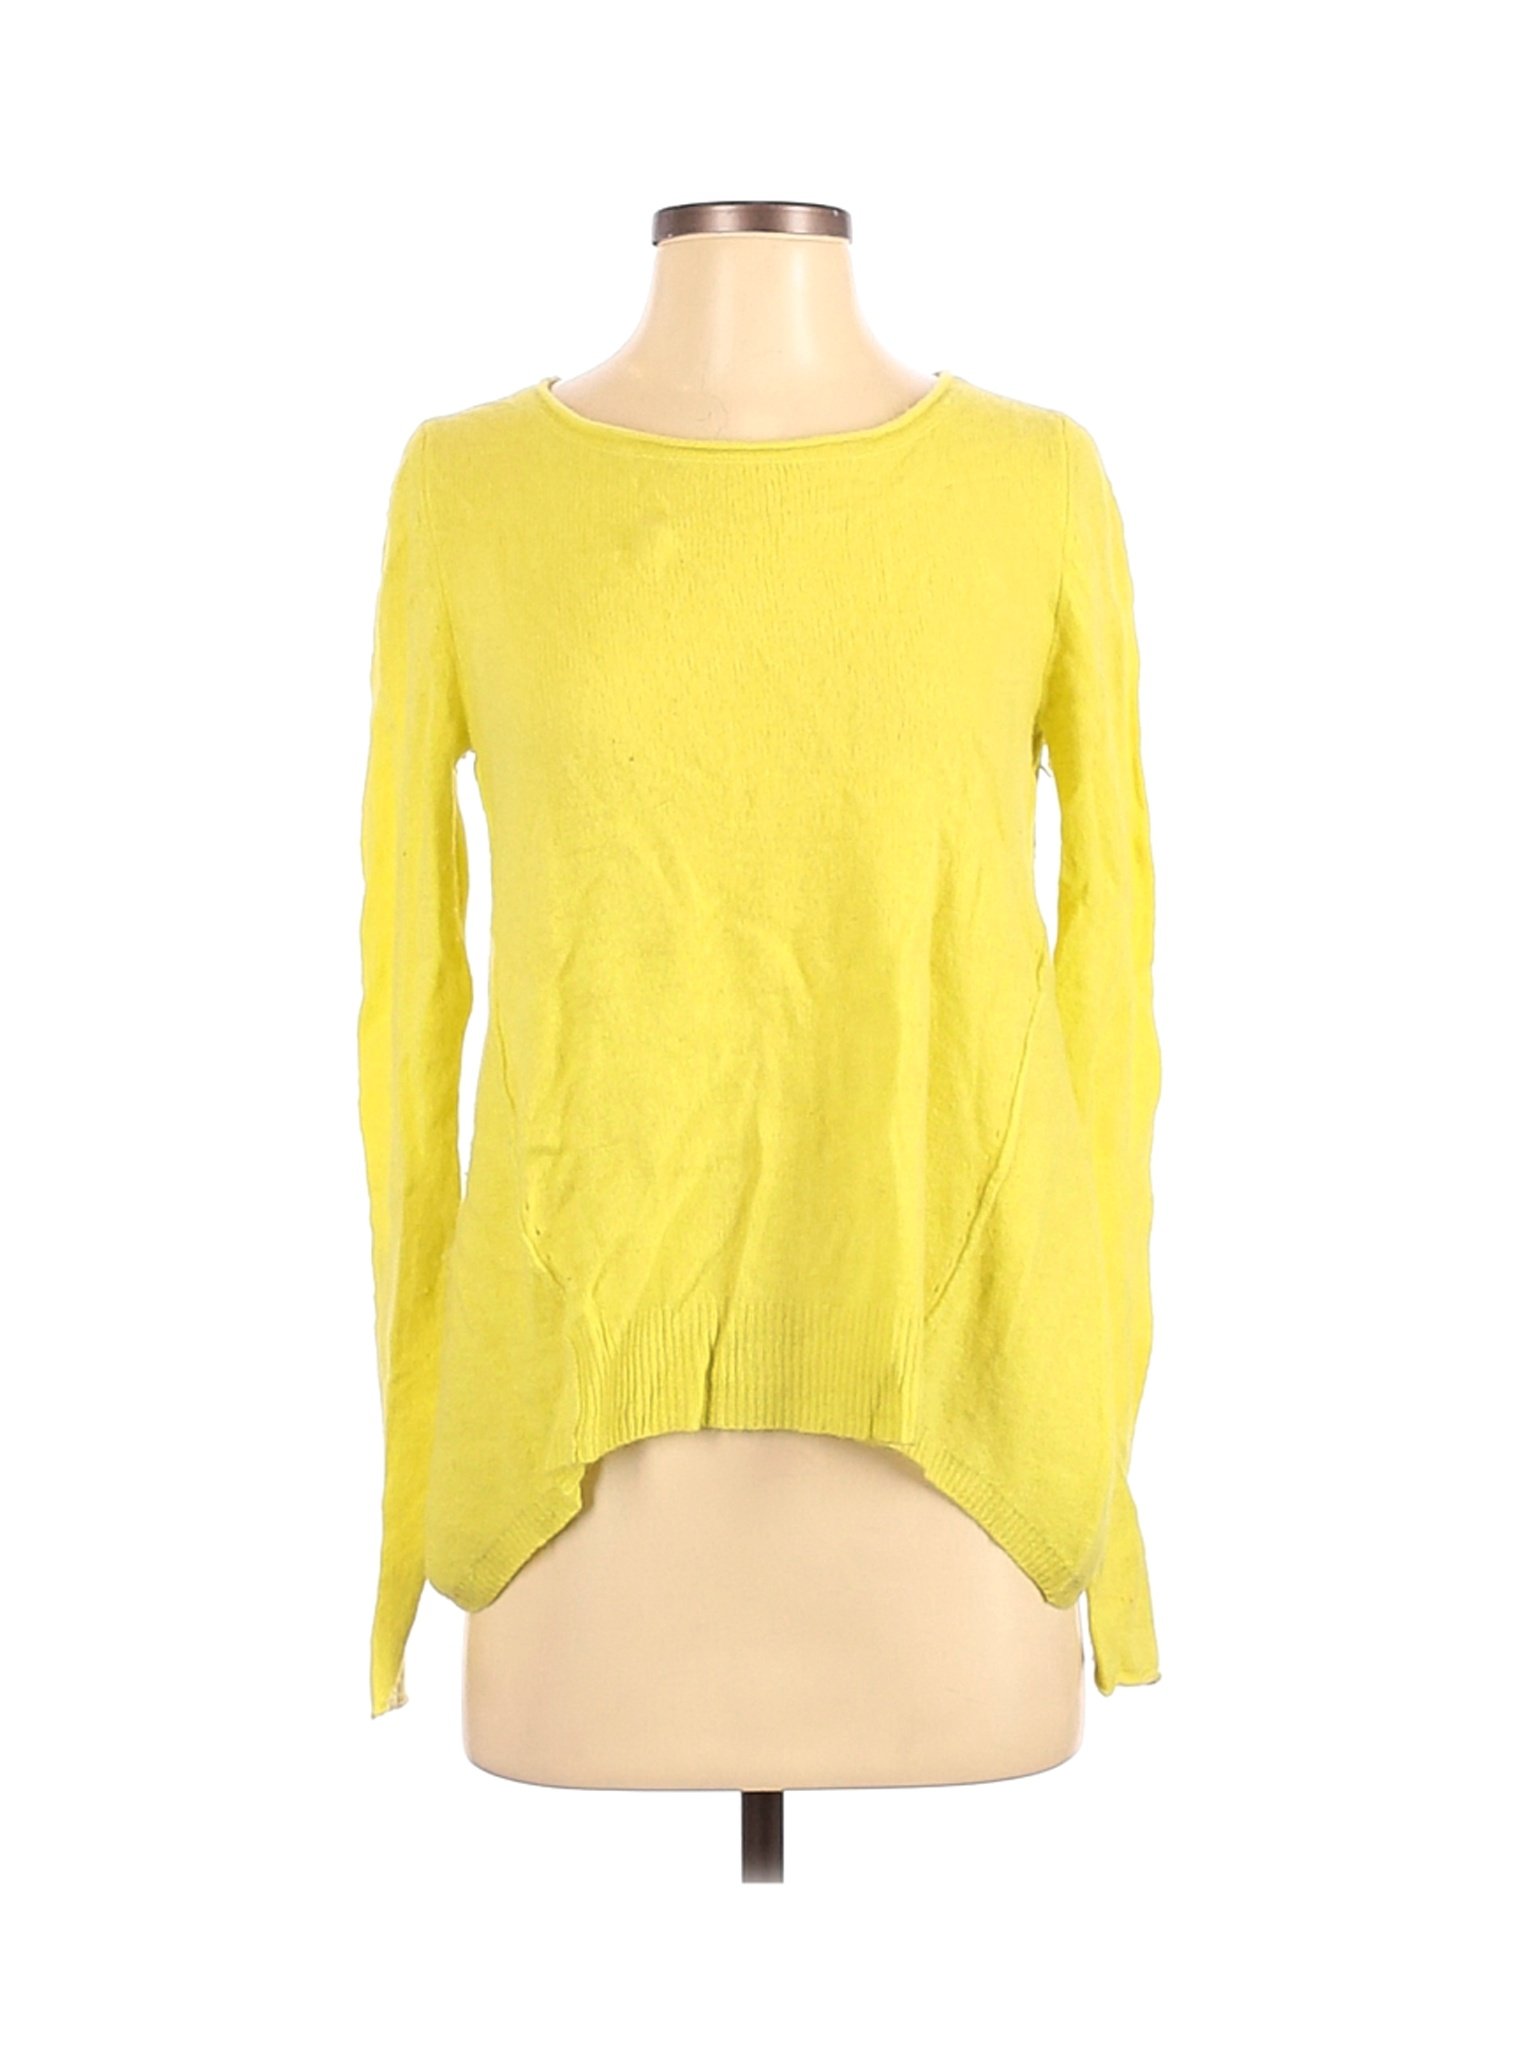 360 Cashmere Women Yellow Pullover Sweater S | eBay